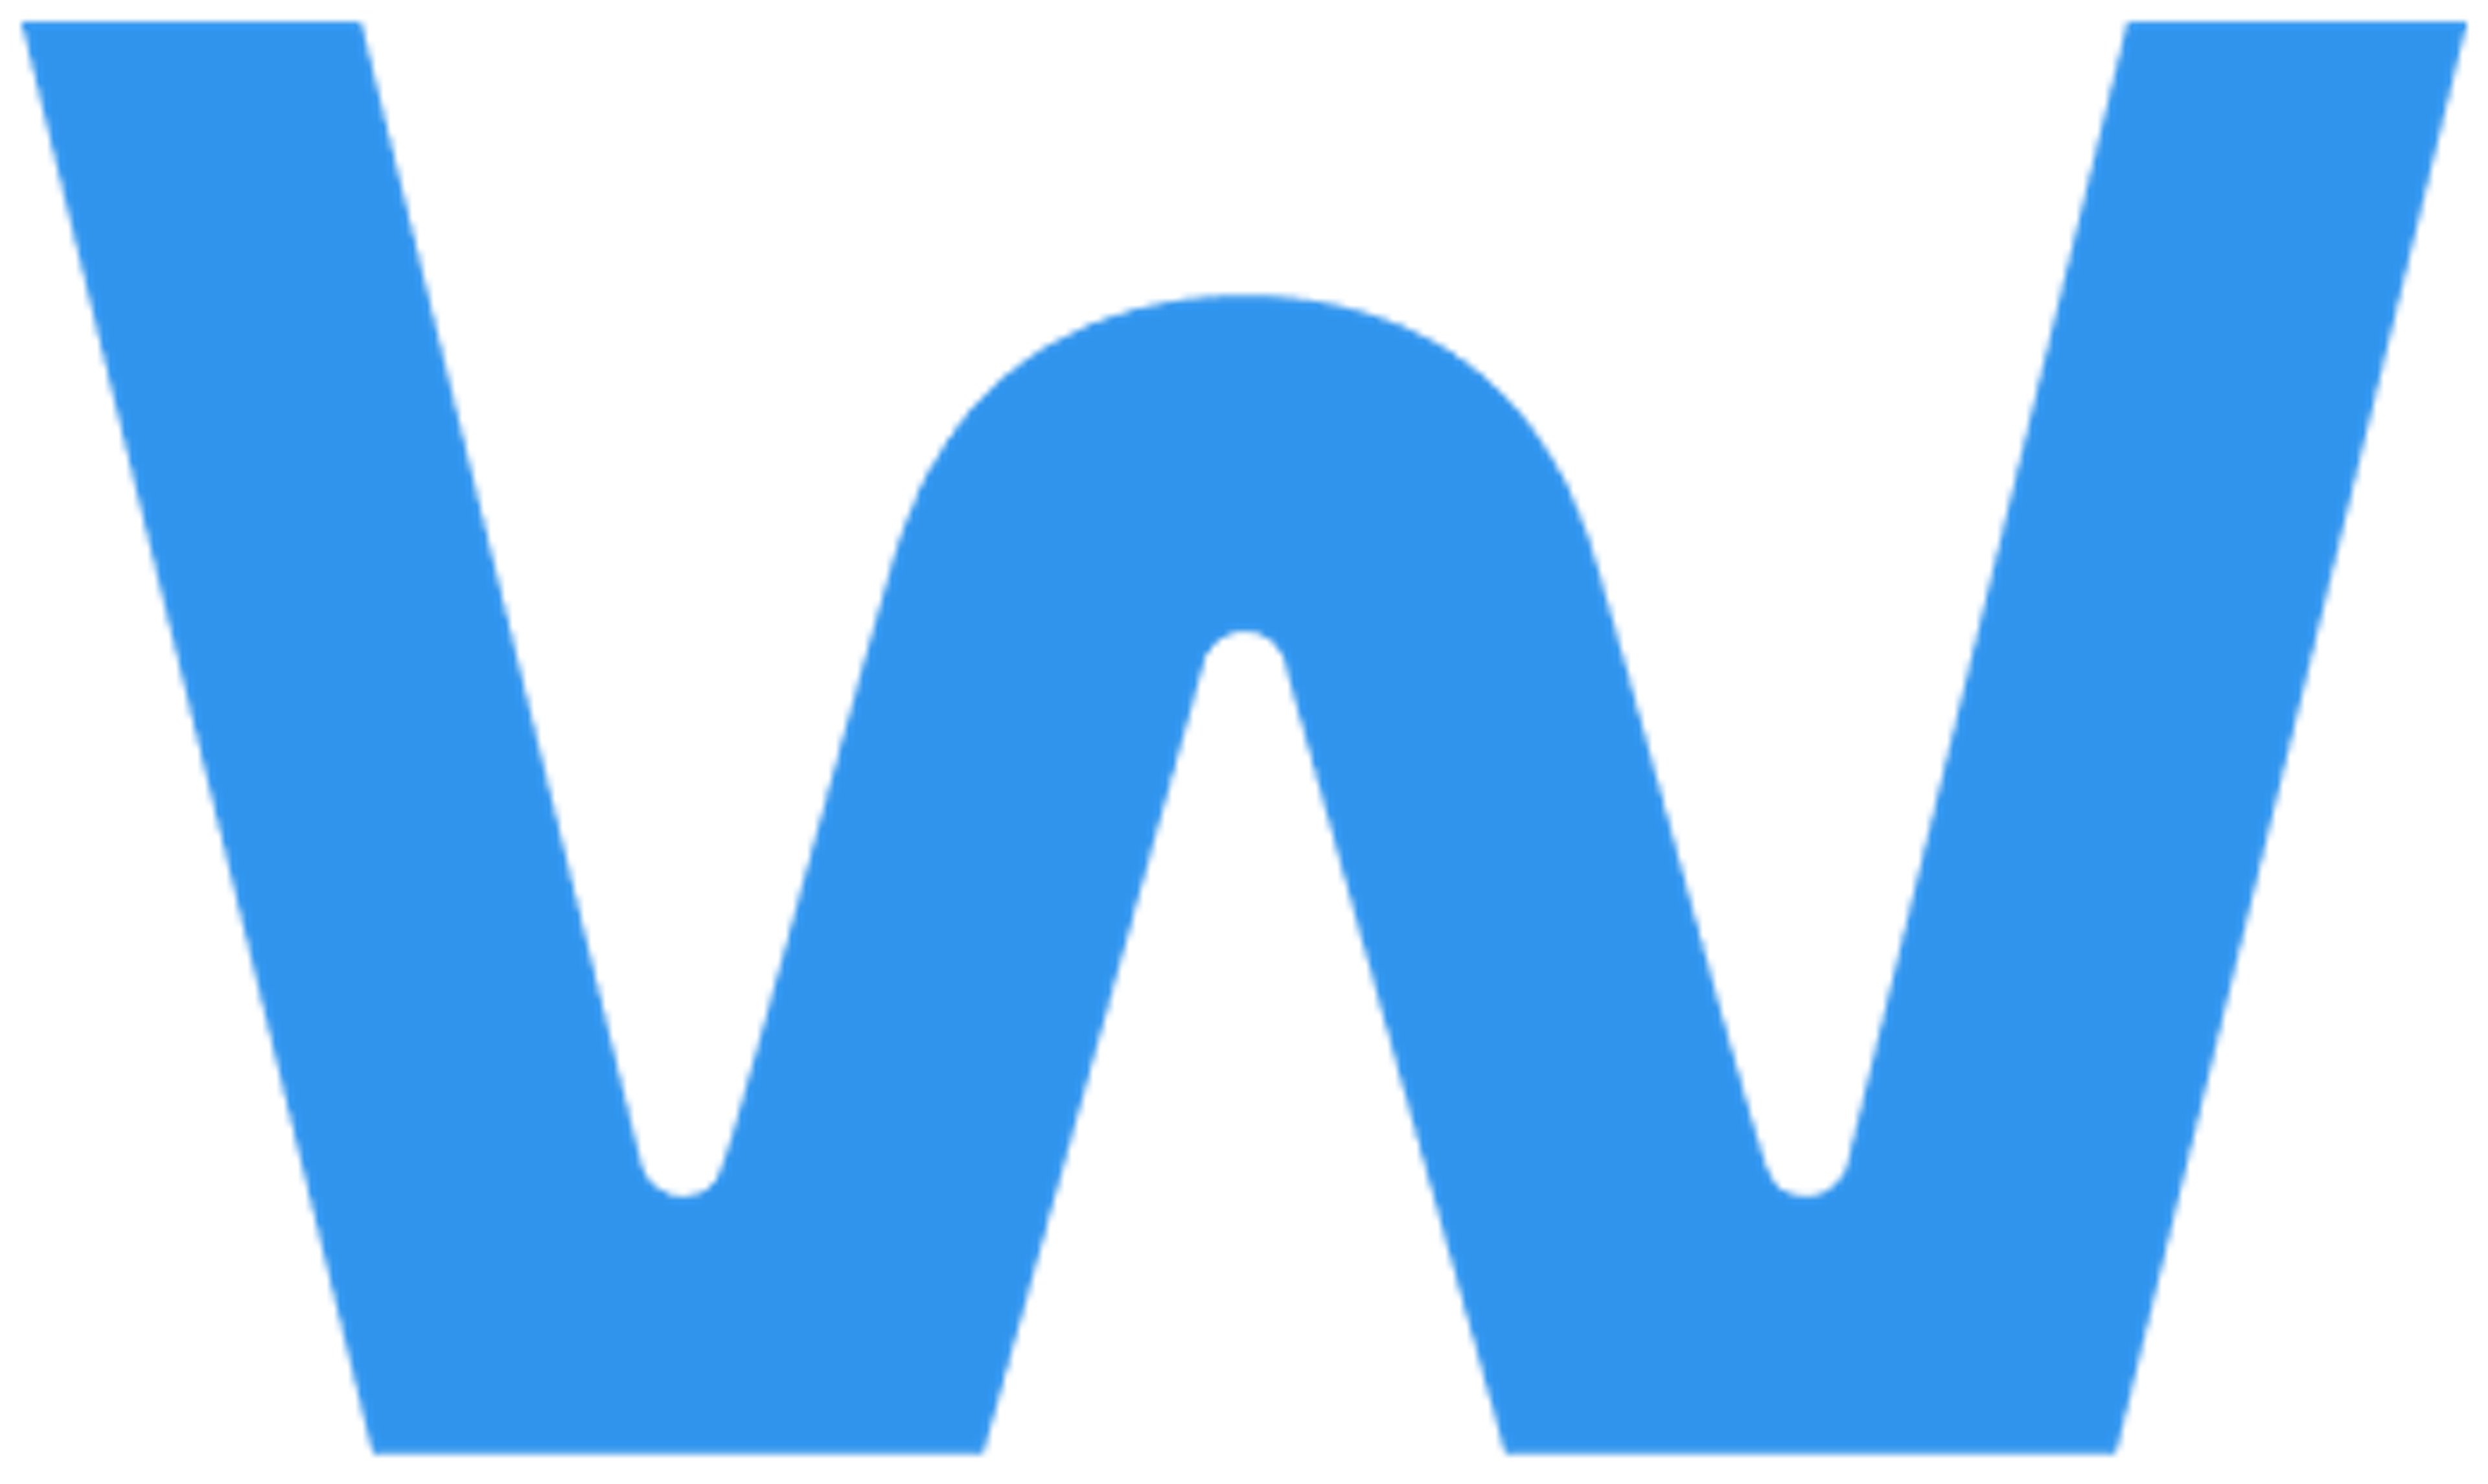 WorkTango Logo